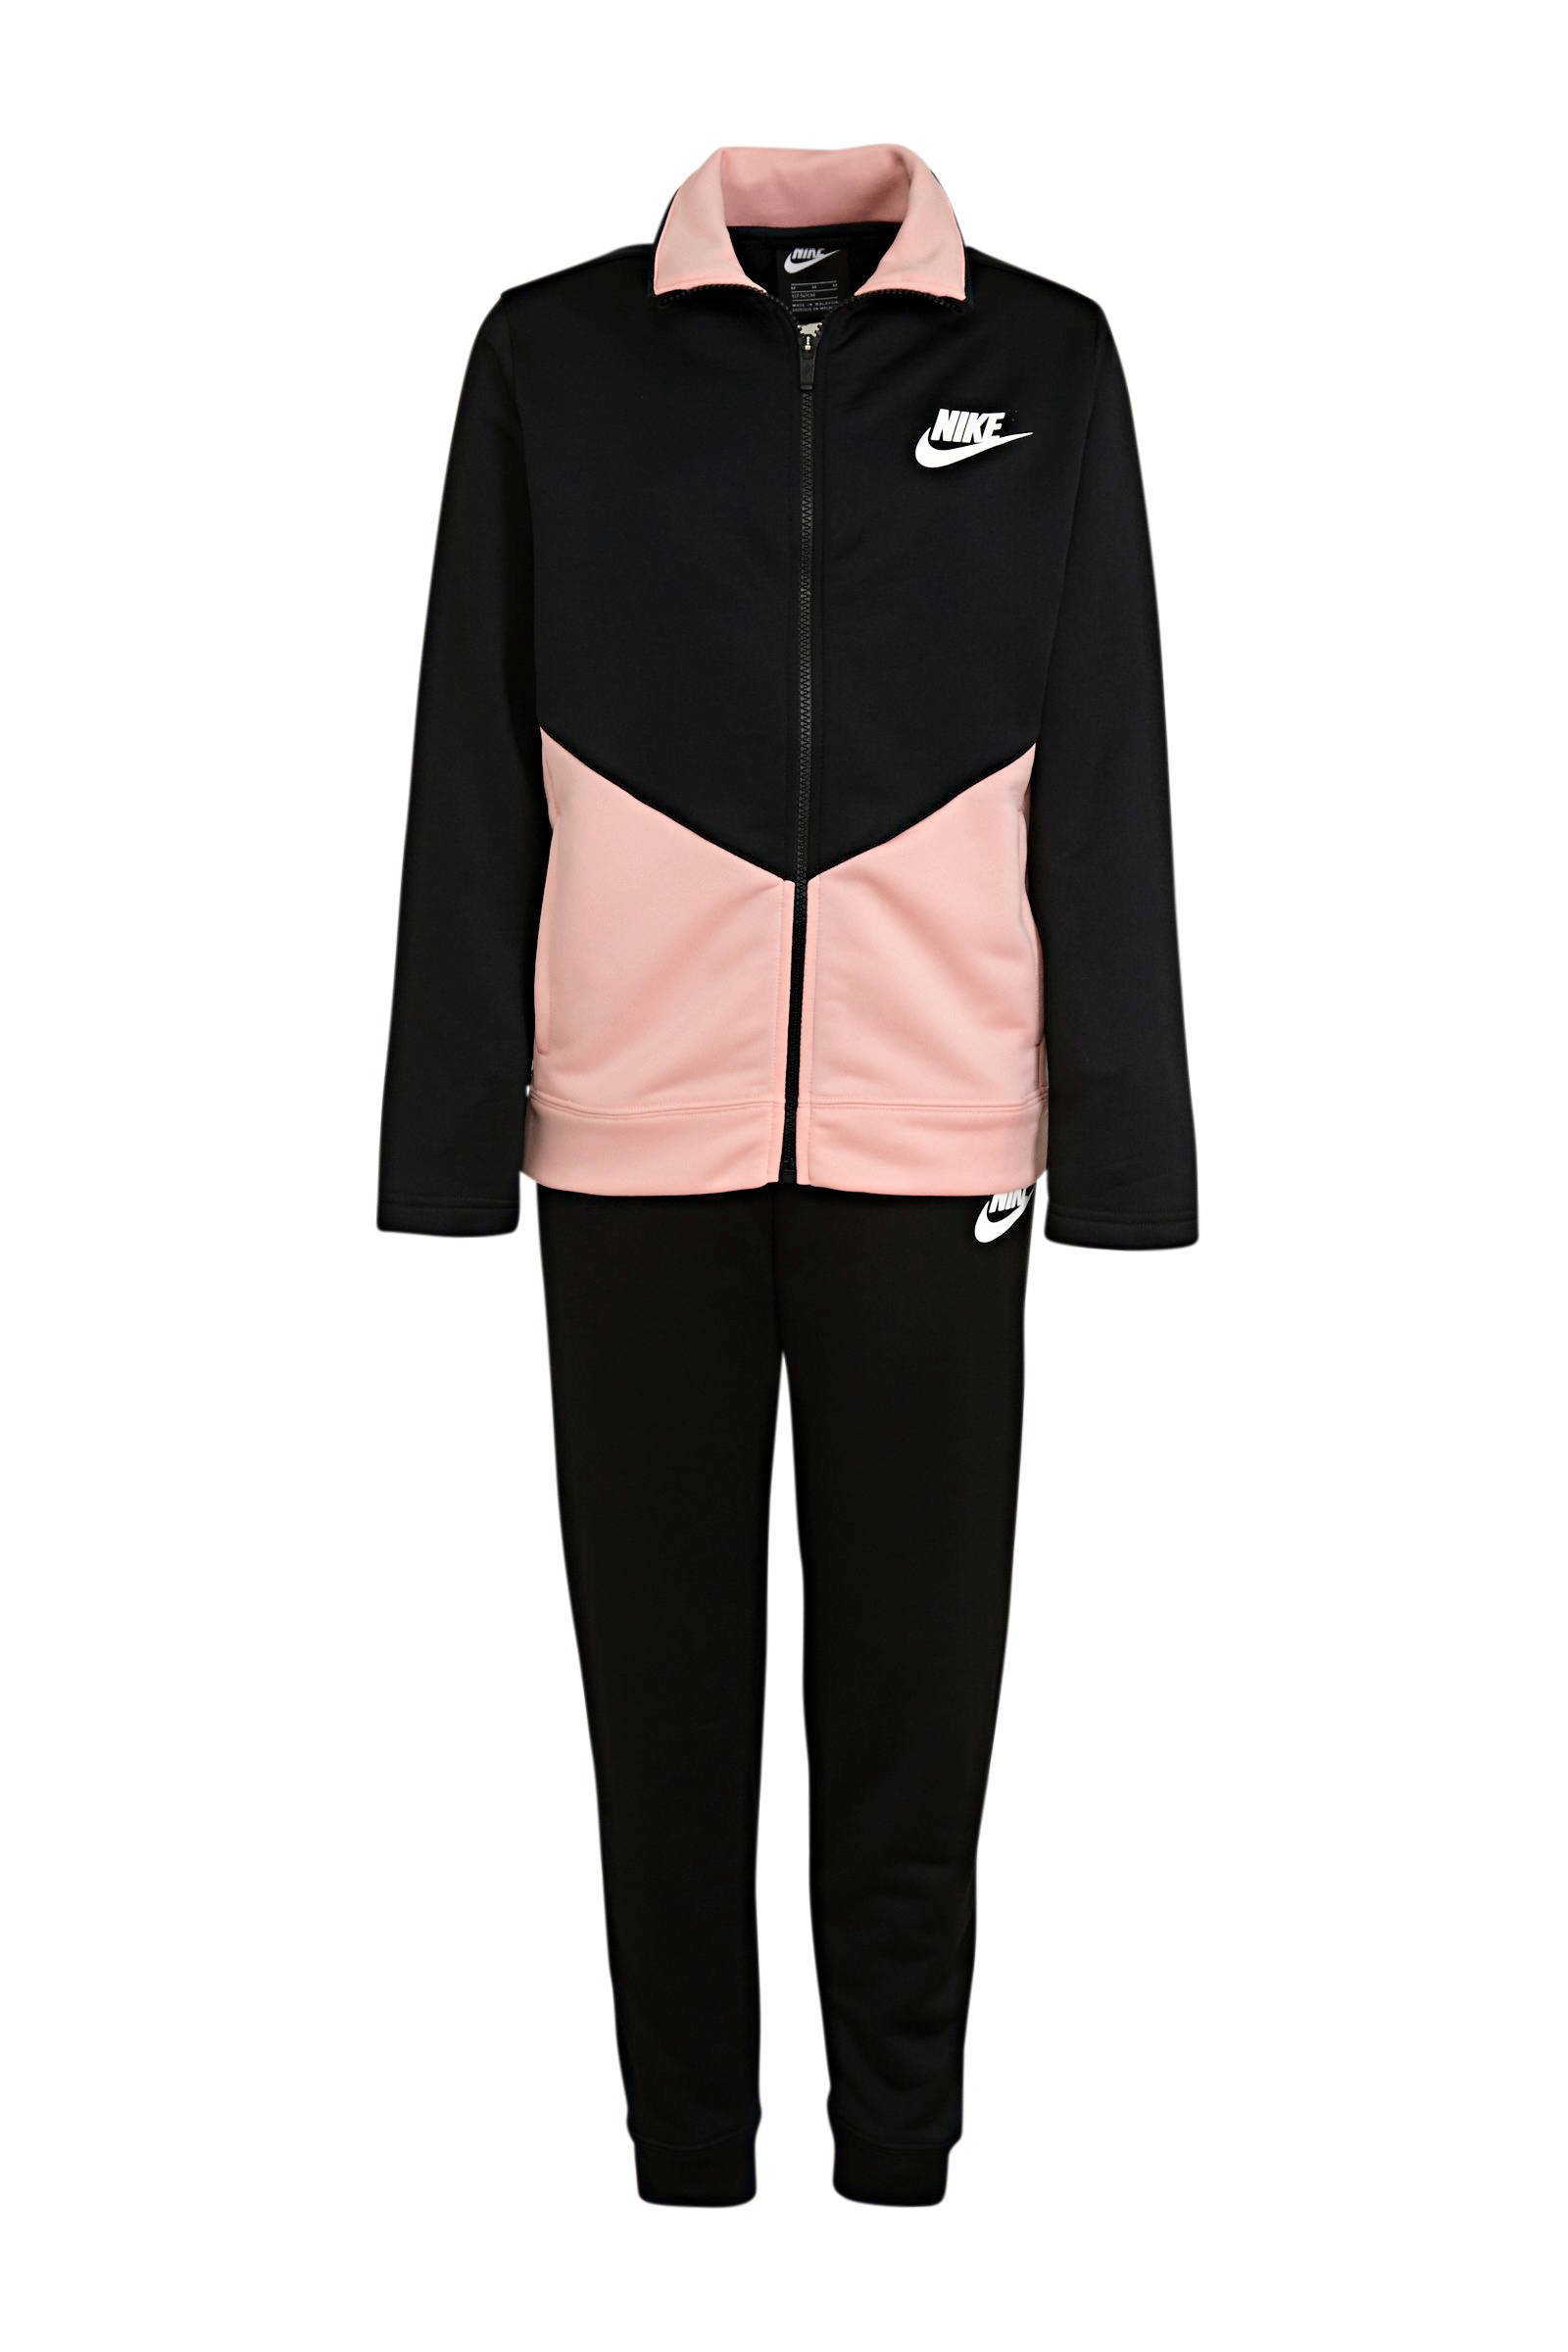 Nike trainingspak zwart/roze | wehkamp